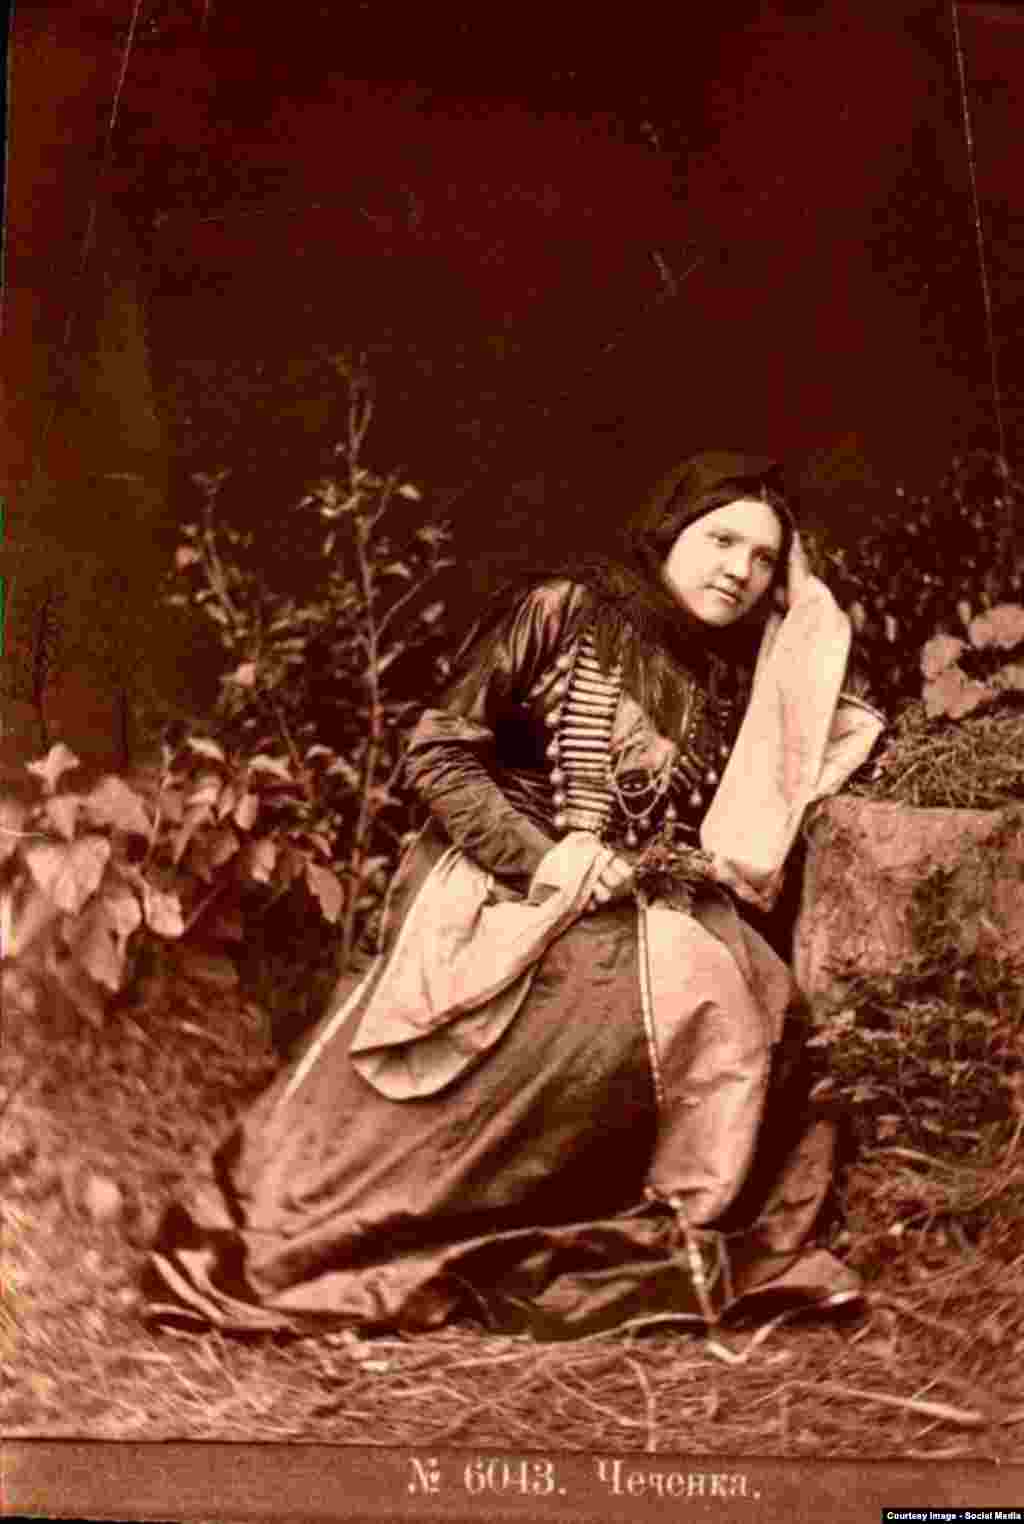 Чеченка, дочь Генжуева из Воздвиженска. Фотография Д. Ермакова